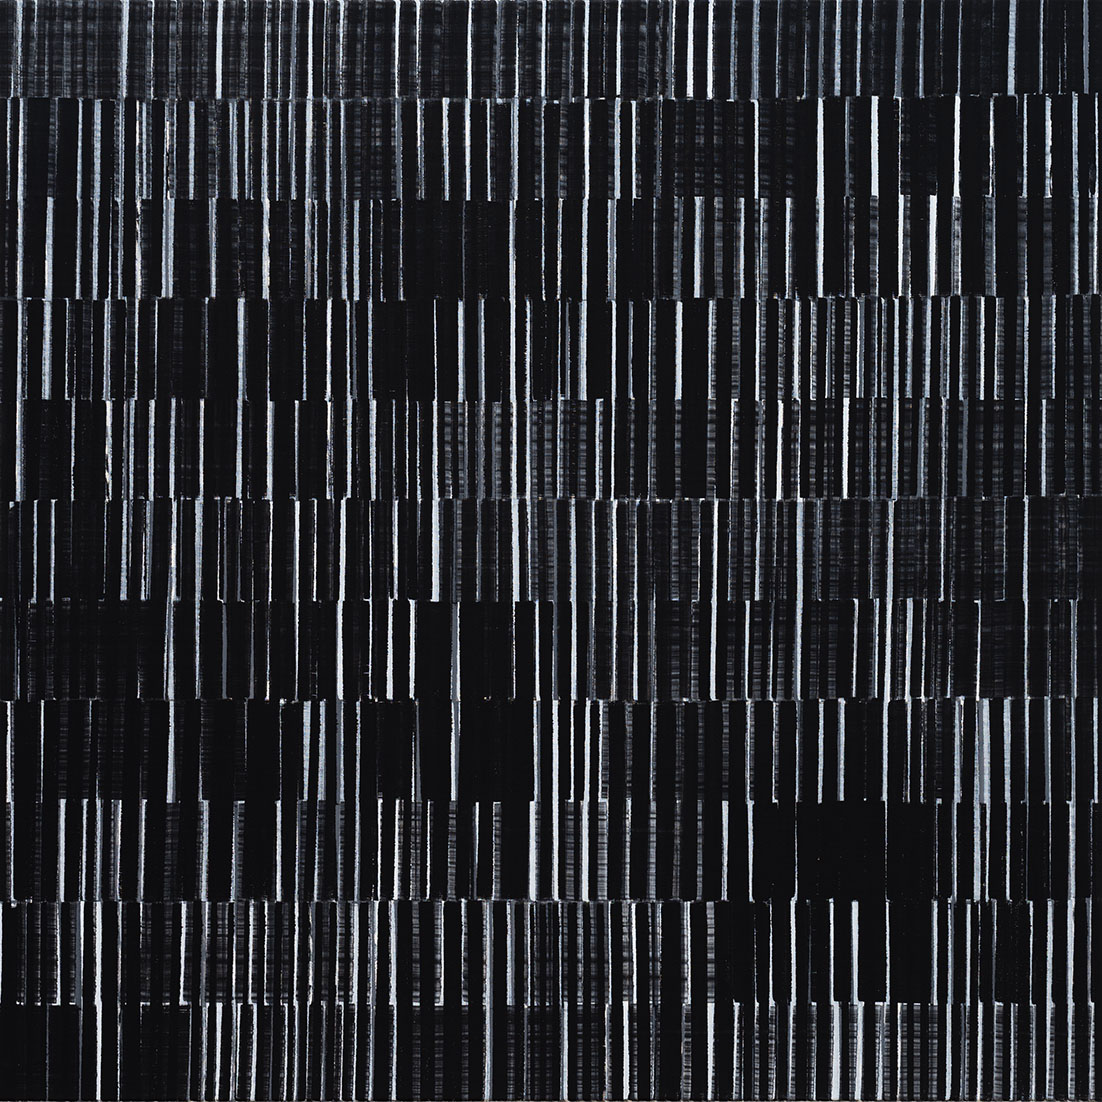 Nikola Dimitrov, NachtKlang VIII, 2020, Pigmente, Bindemittel auf Leinwand, 110 x 110 cm